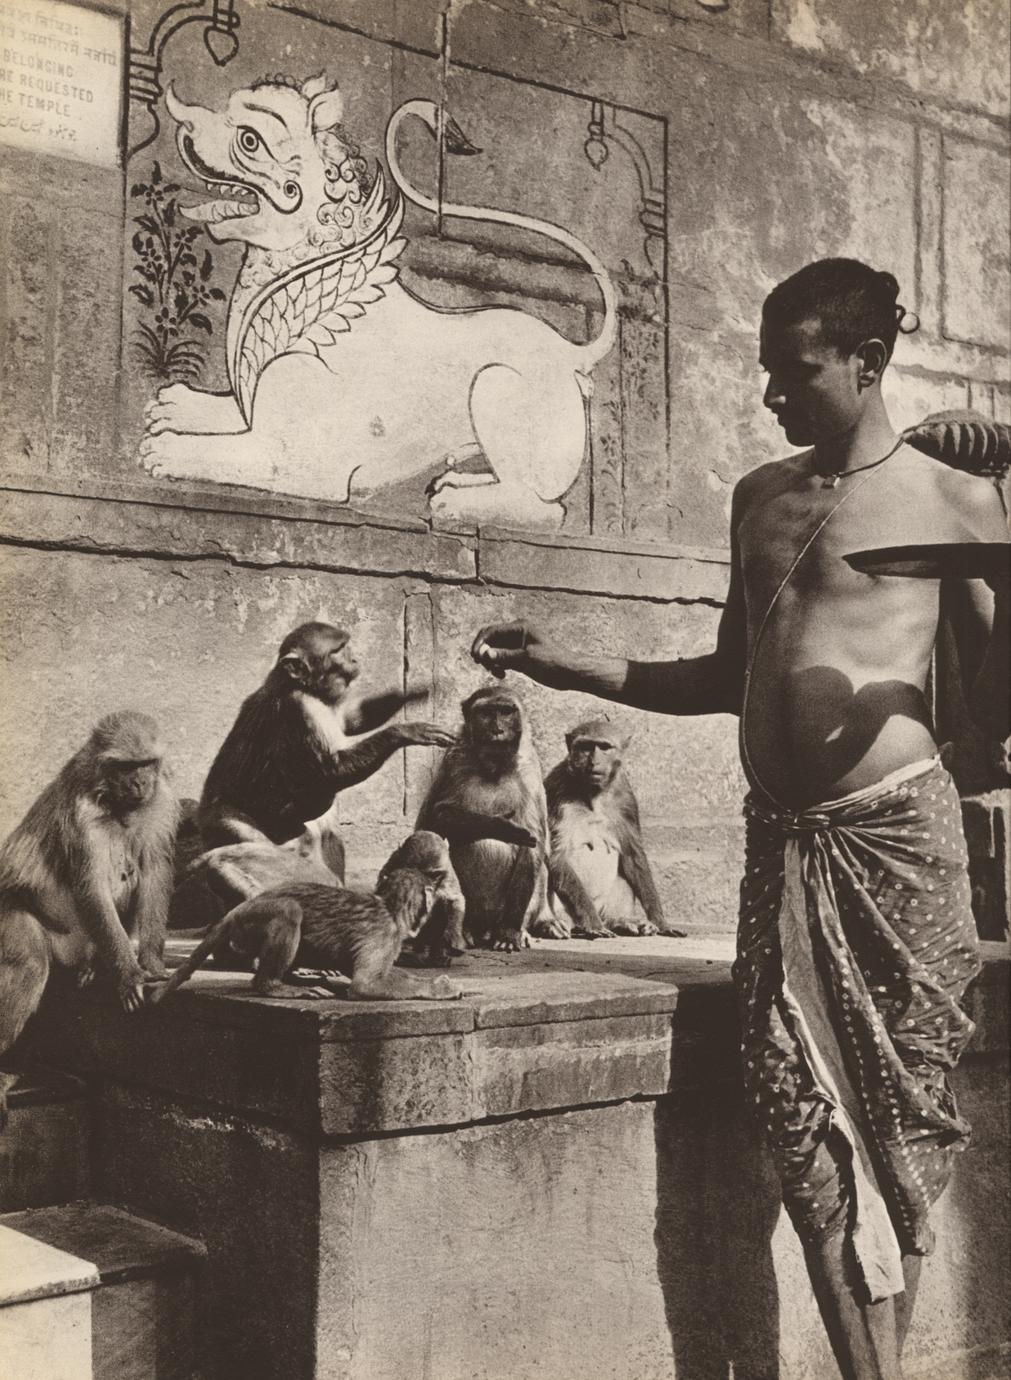 Indian Rhesus Macaque Photograph